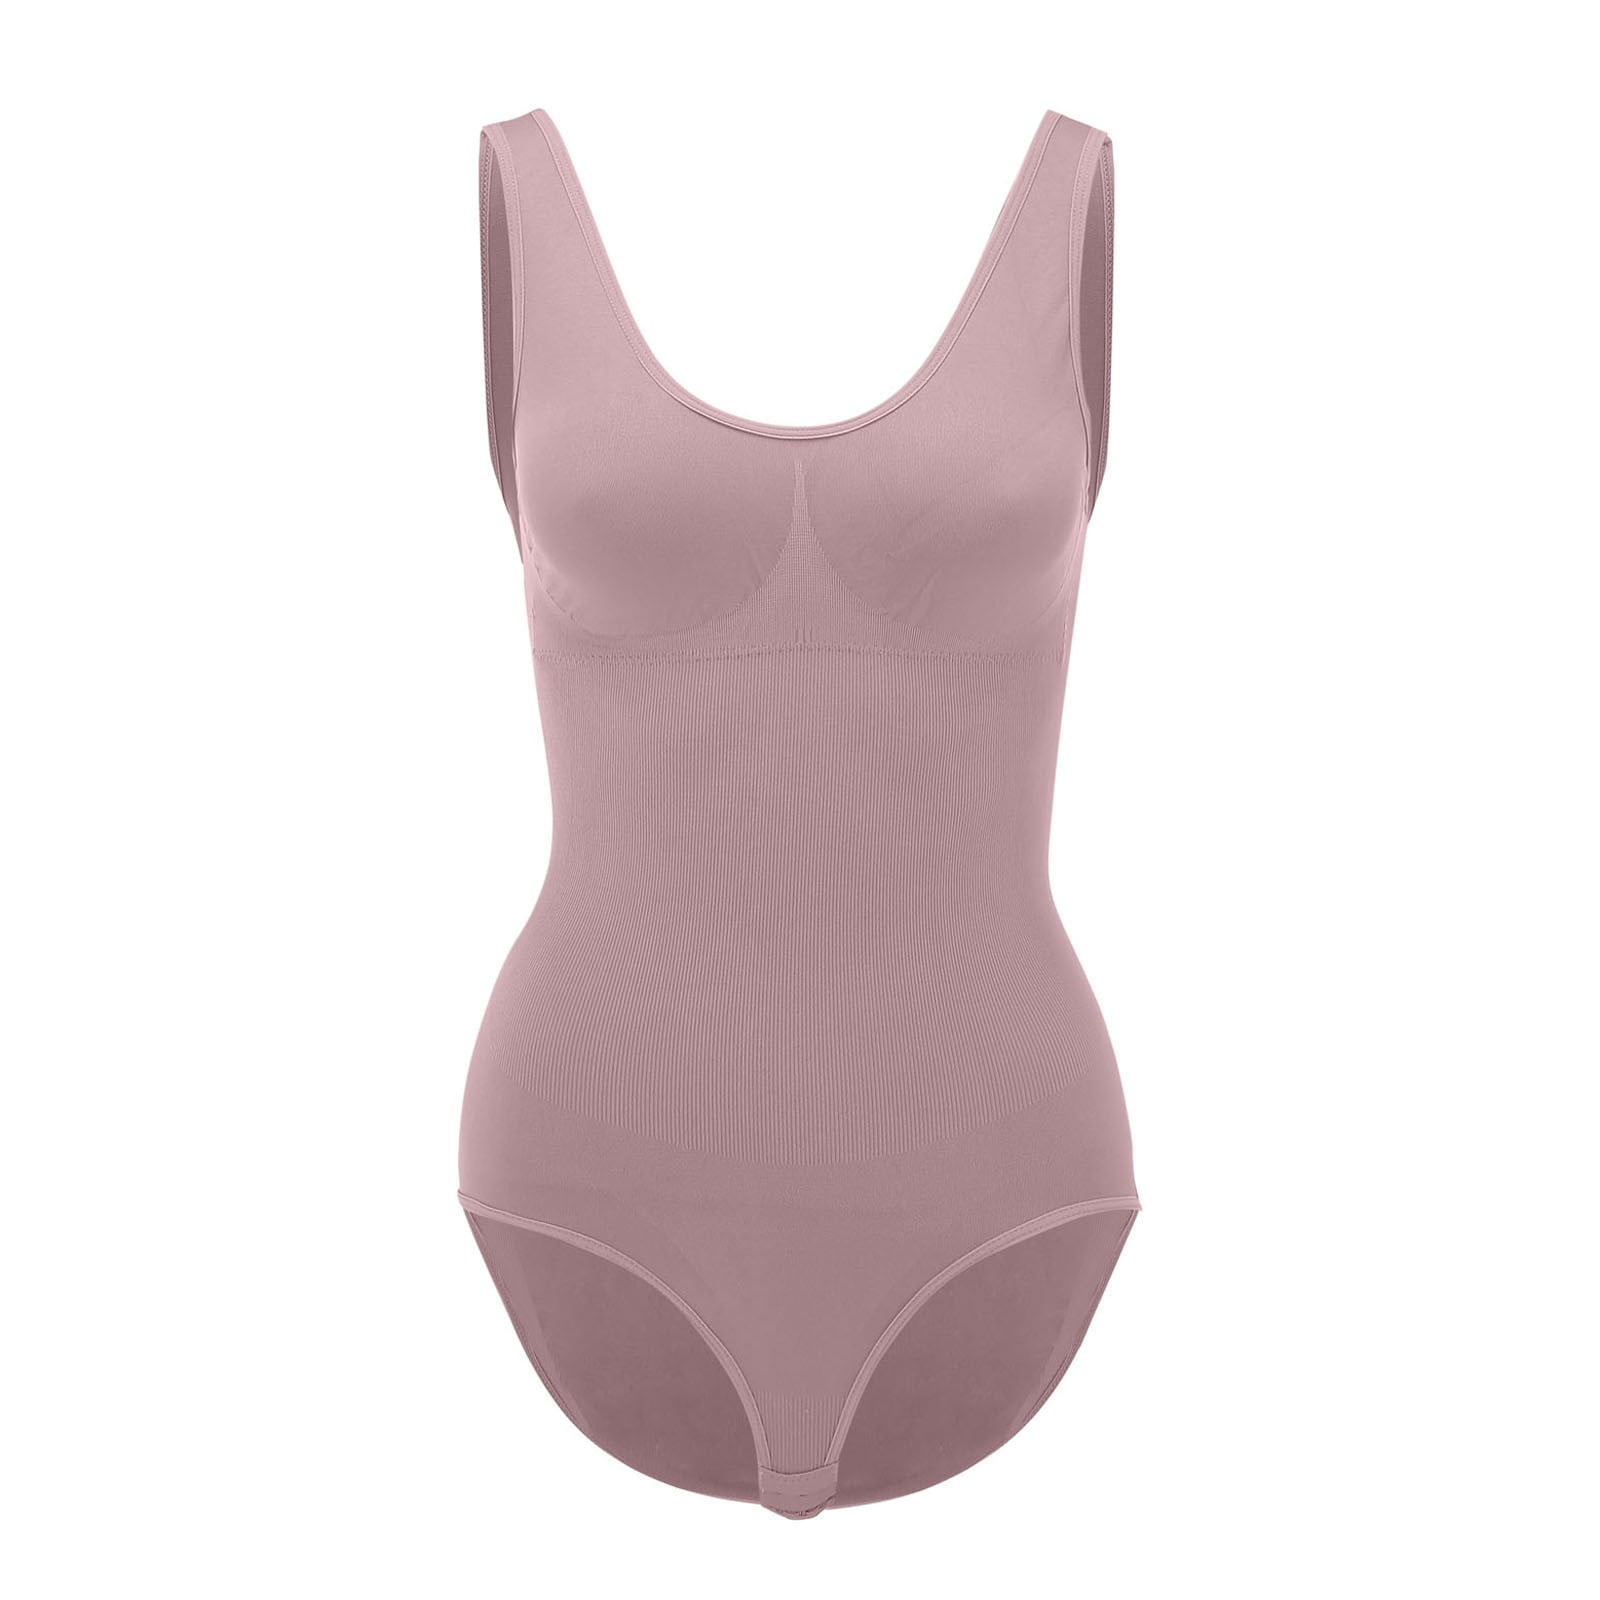 Aayomet Women's Bodysuits Ribbed Sleeveless Shapewear Tank Tops Bodysuits, Pink M 